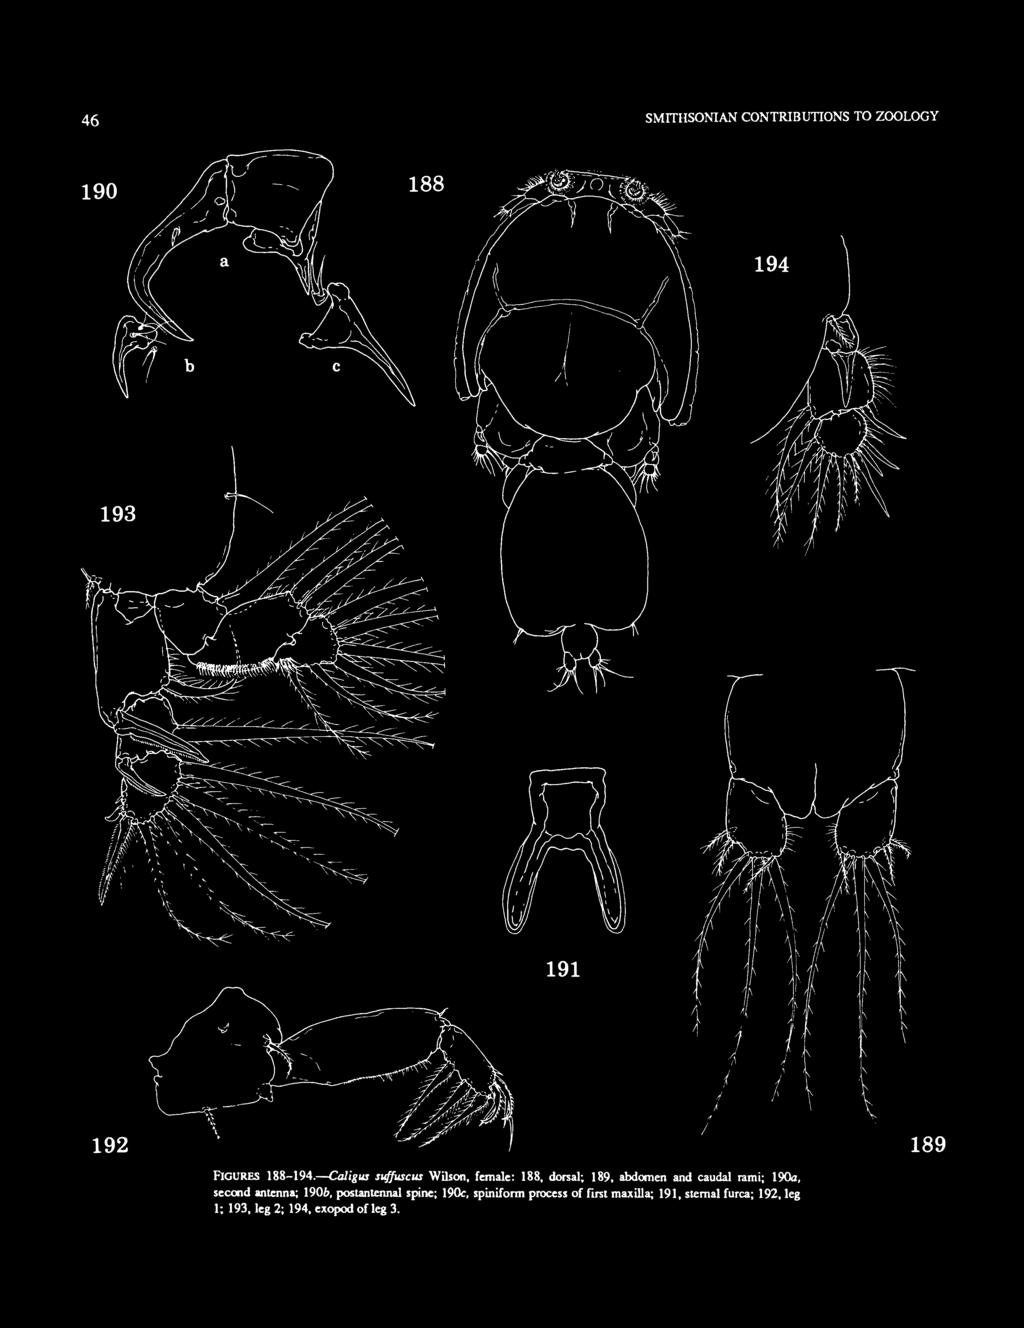 abdomen and caudal rami; 190a, second antenna; 1906, postantennal spine; 190c,